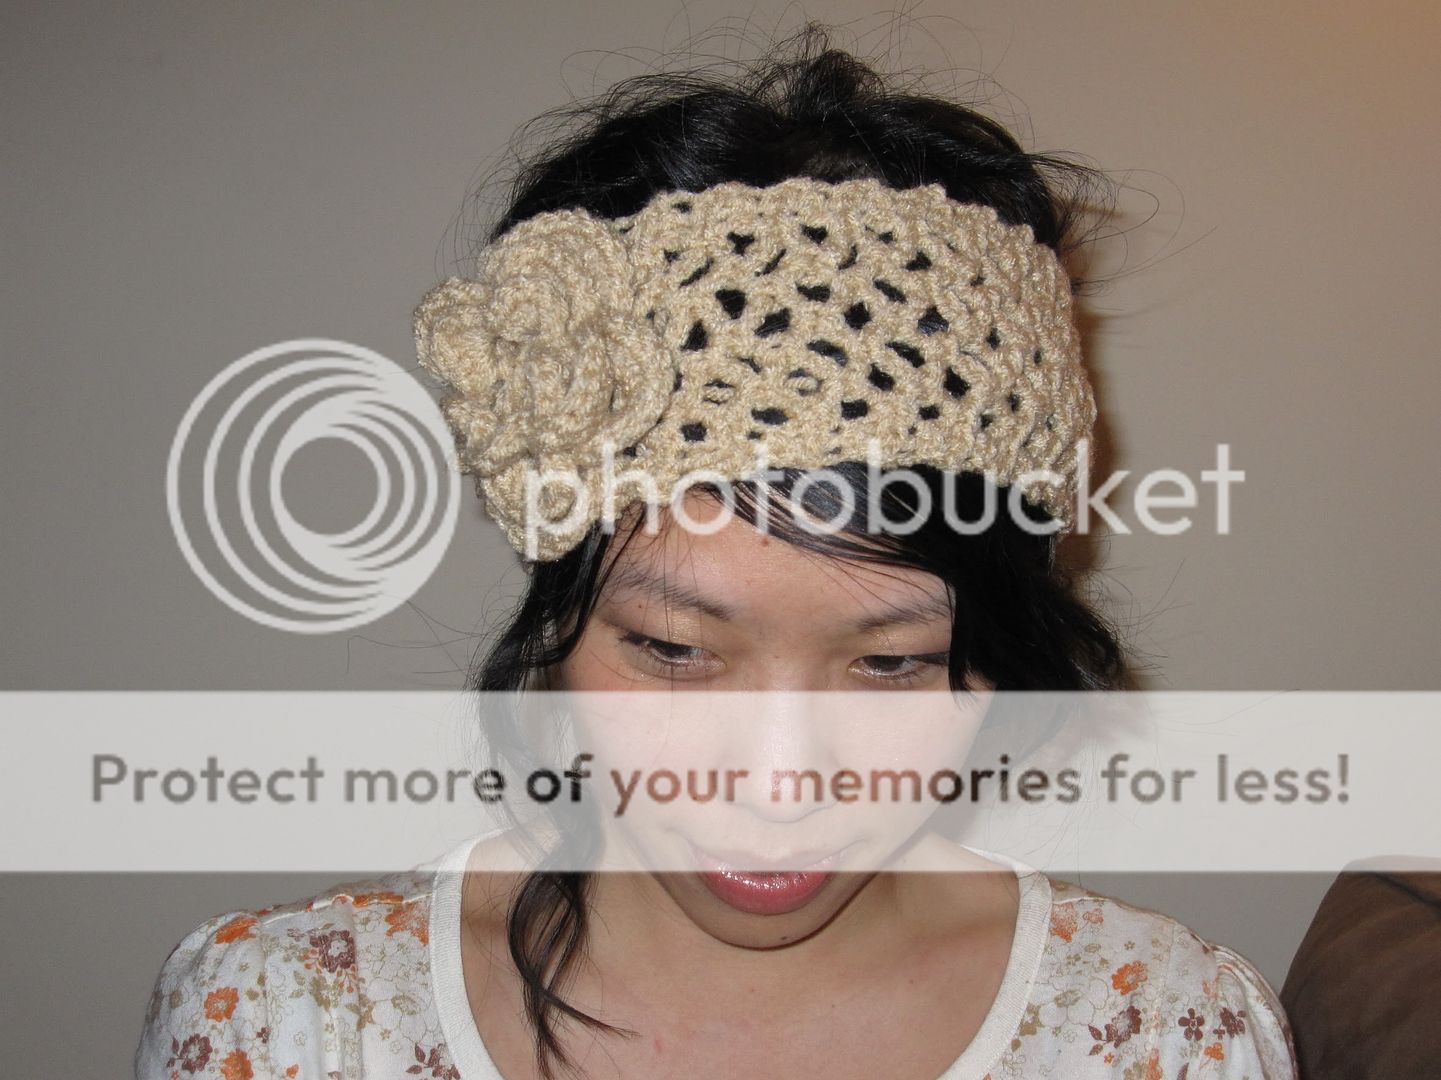 Crochet baby headband -
TheFind